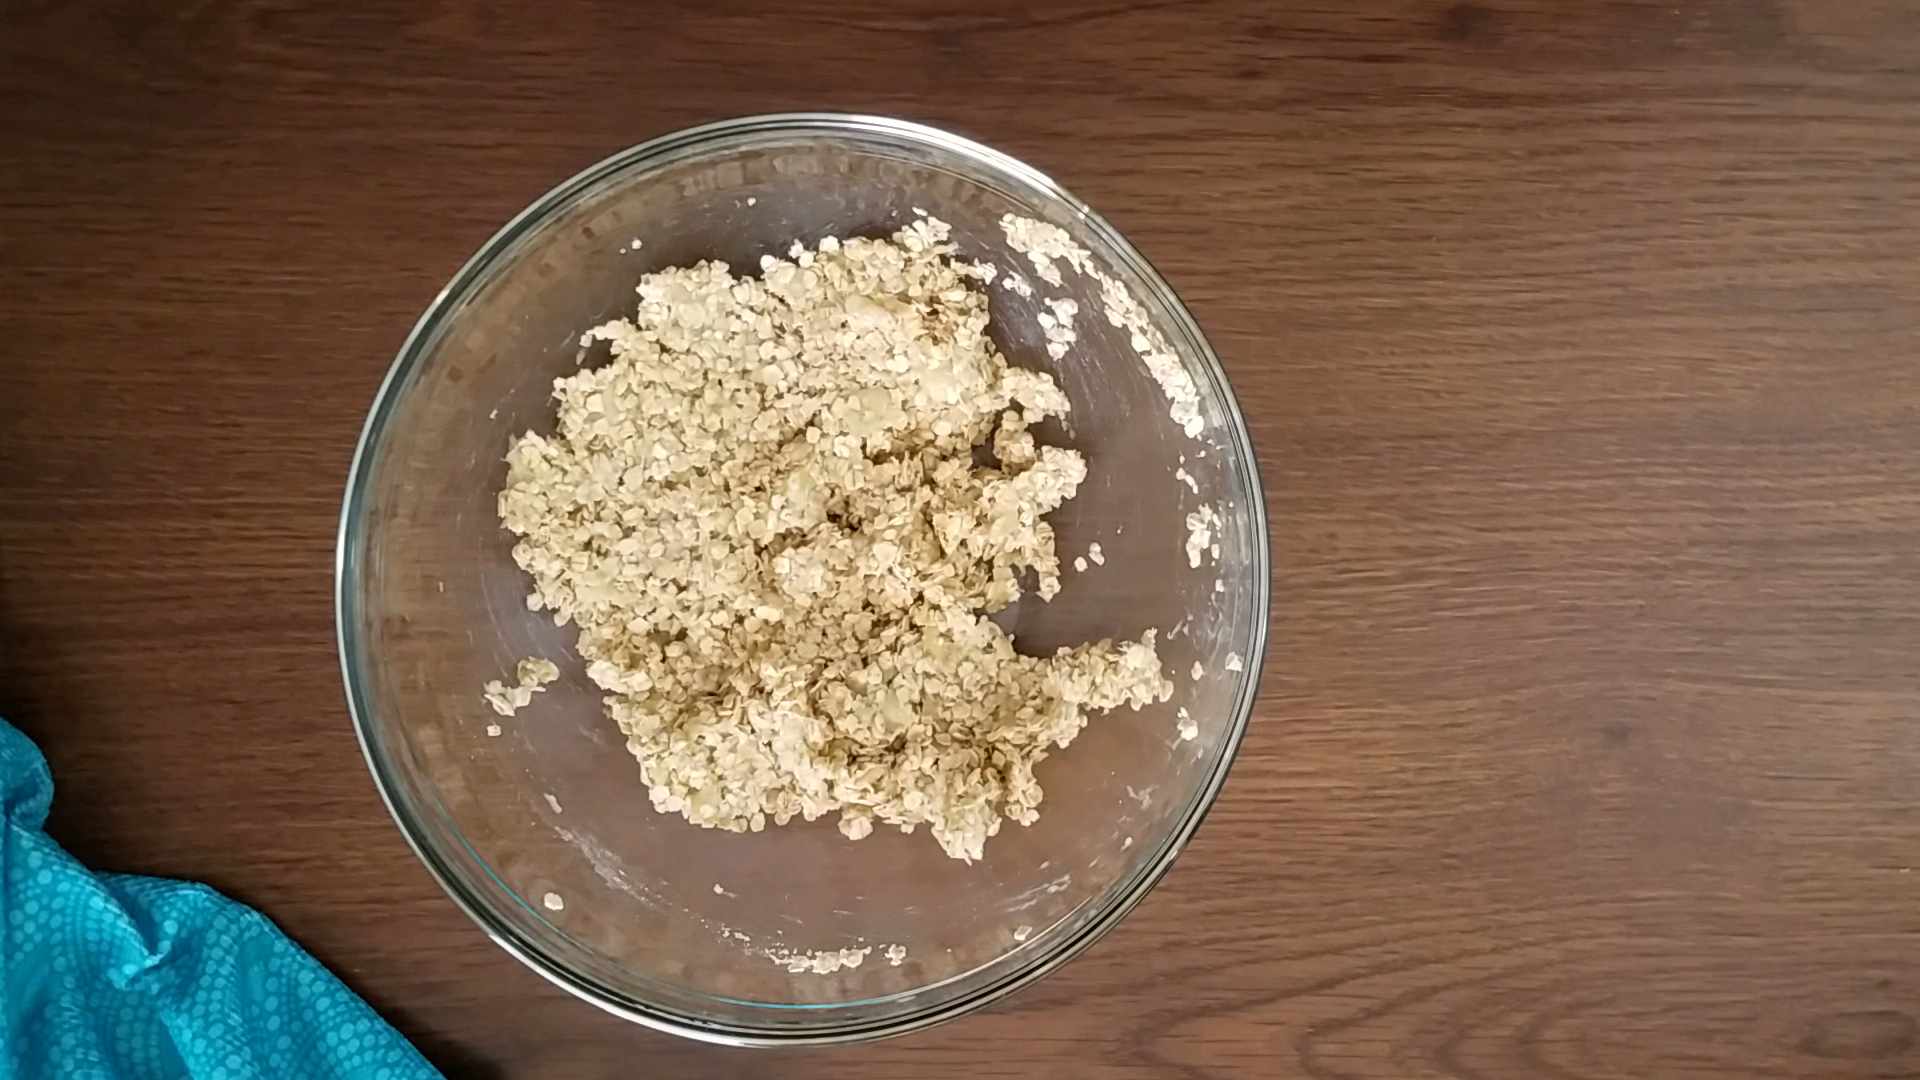 banana oatmeal dog recipe ingredientsfinal mix